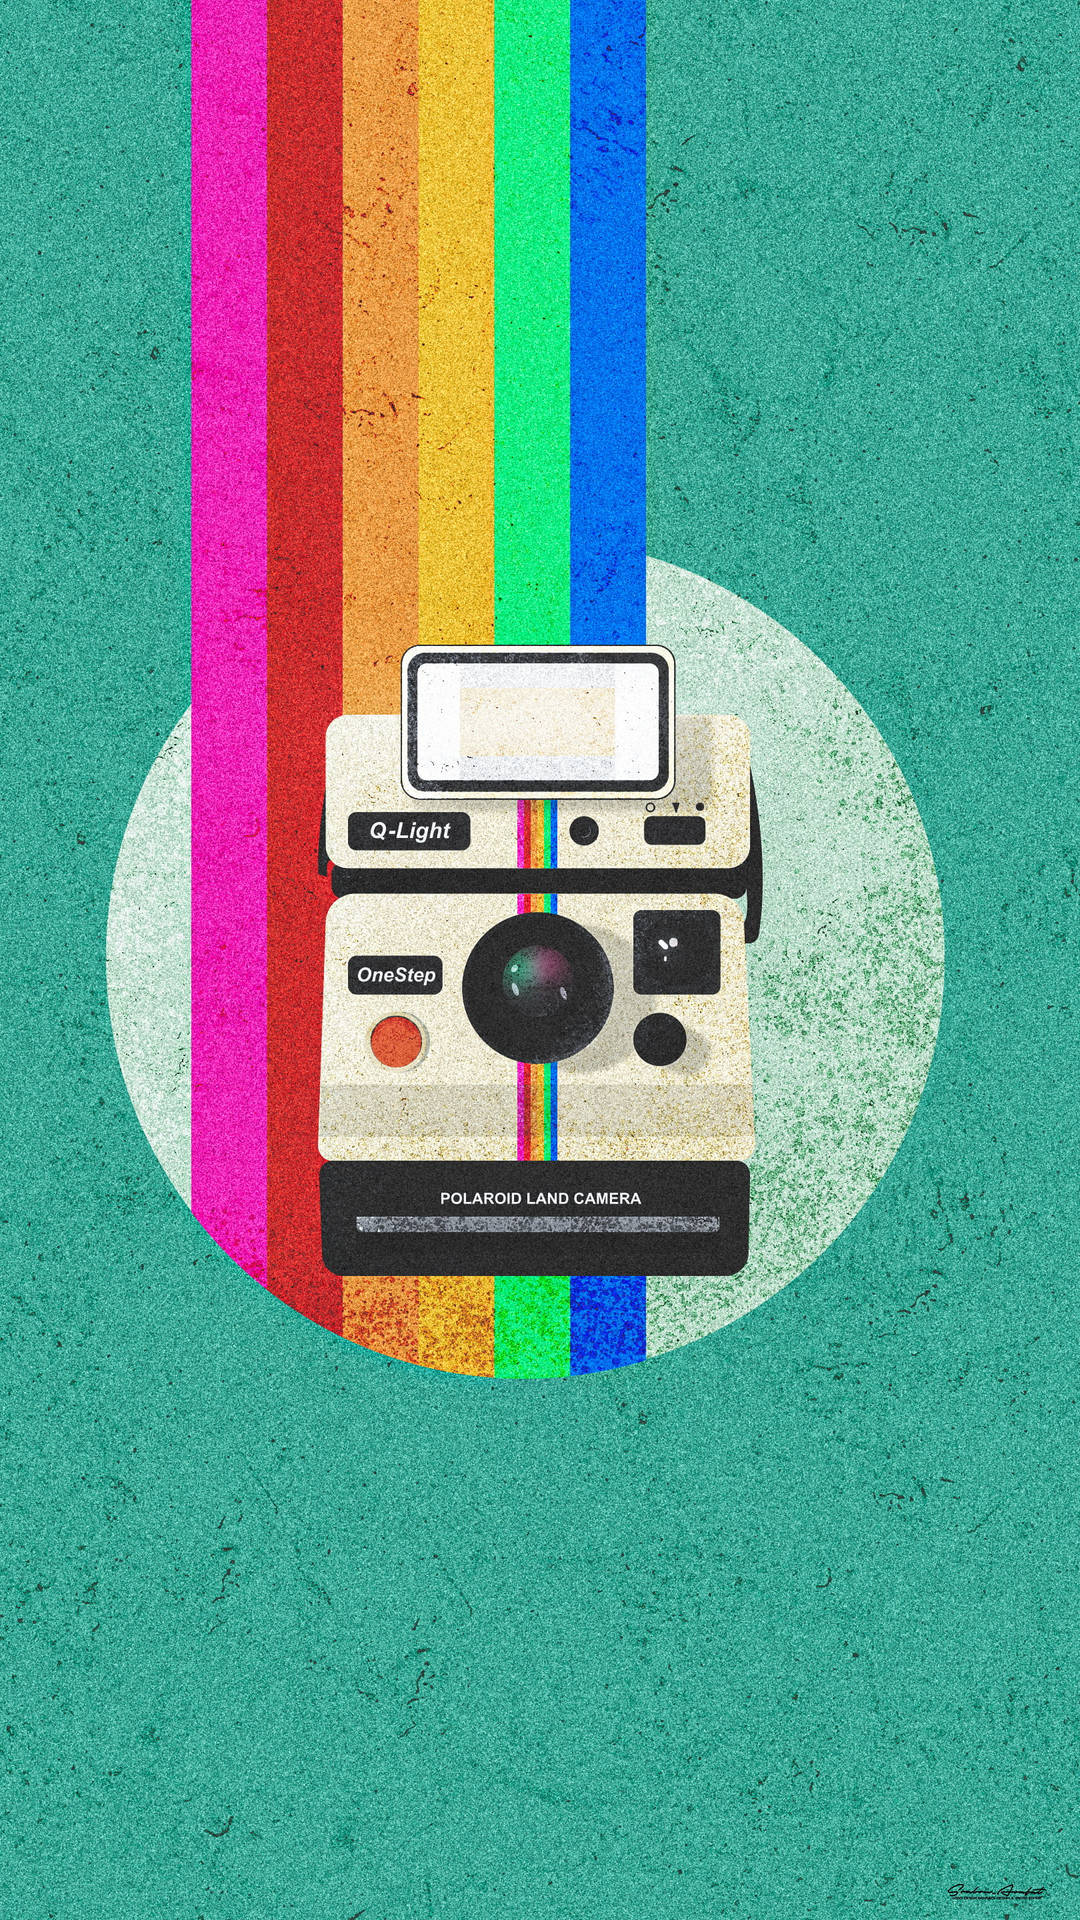 A polaroid camera with rainbow stripes behind it - Polaroid